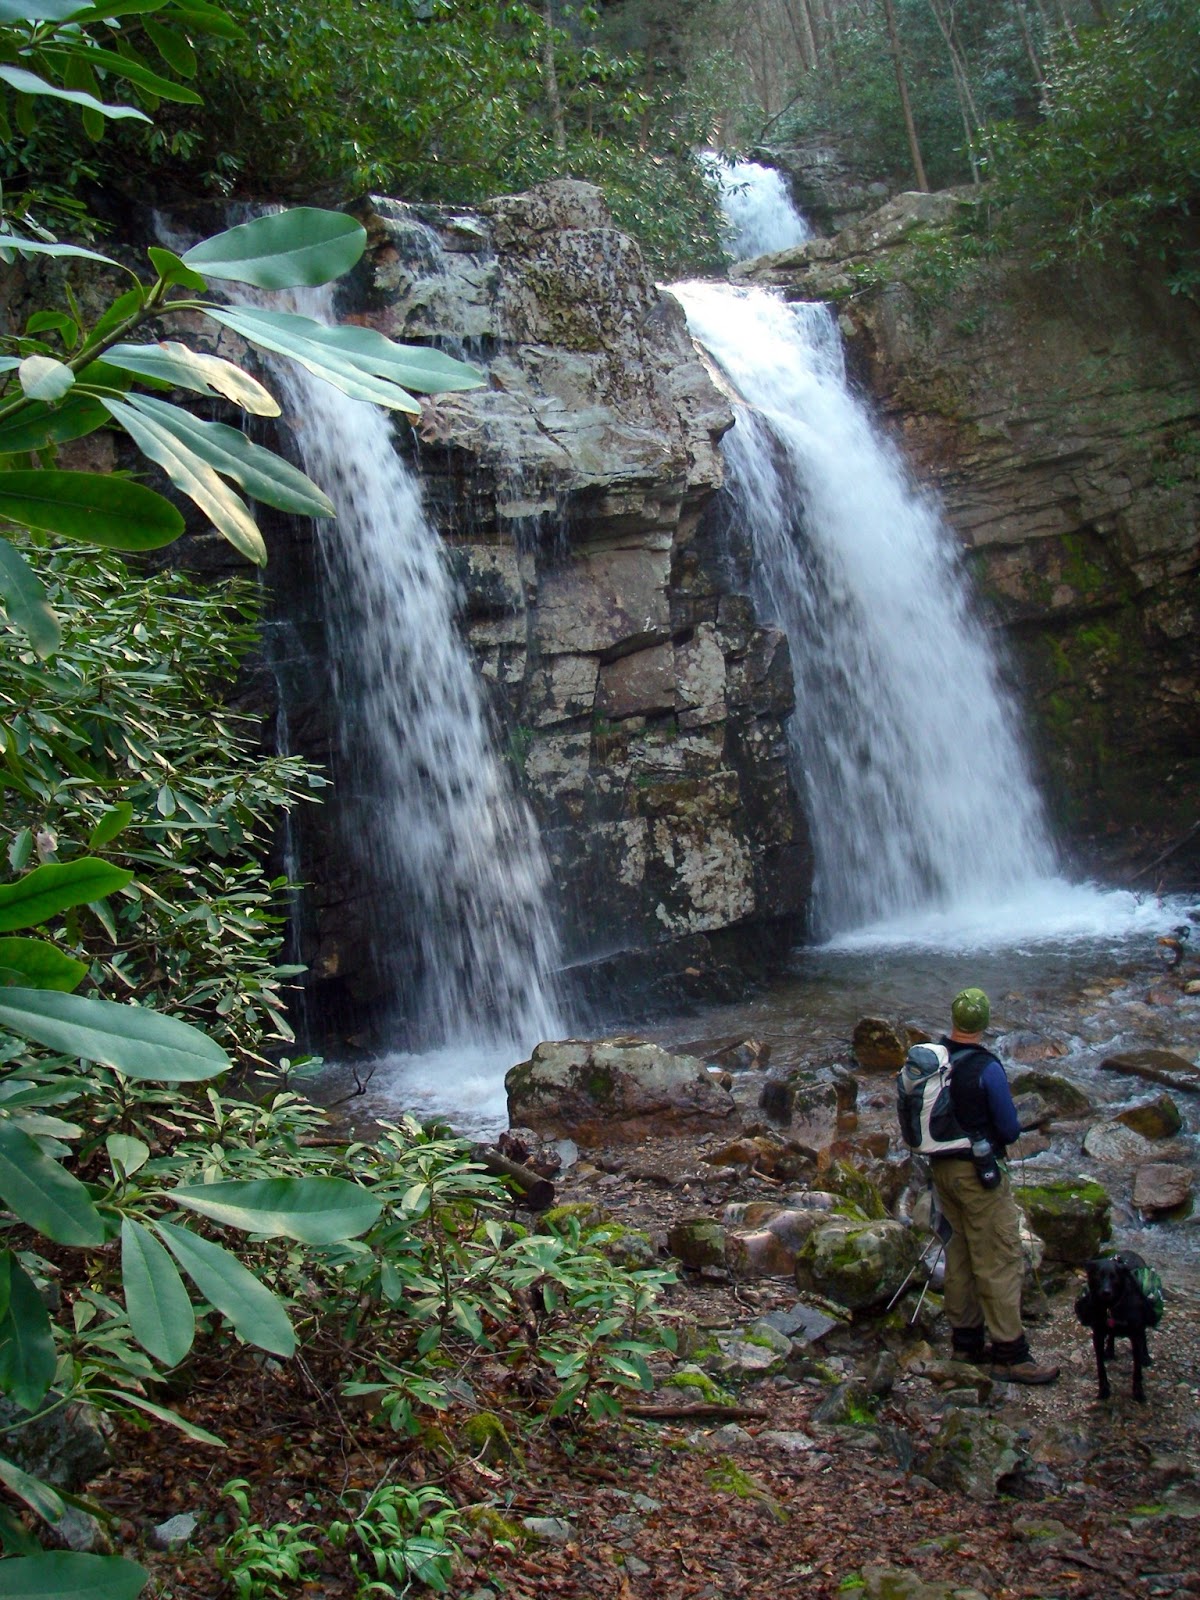 Hiking Trails Near Me With Waterfalls Nc | ReGreen Springfield